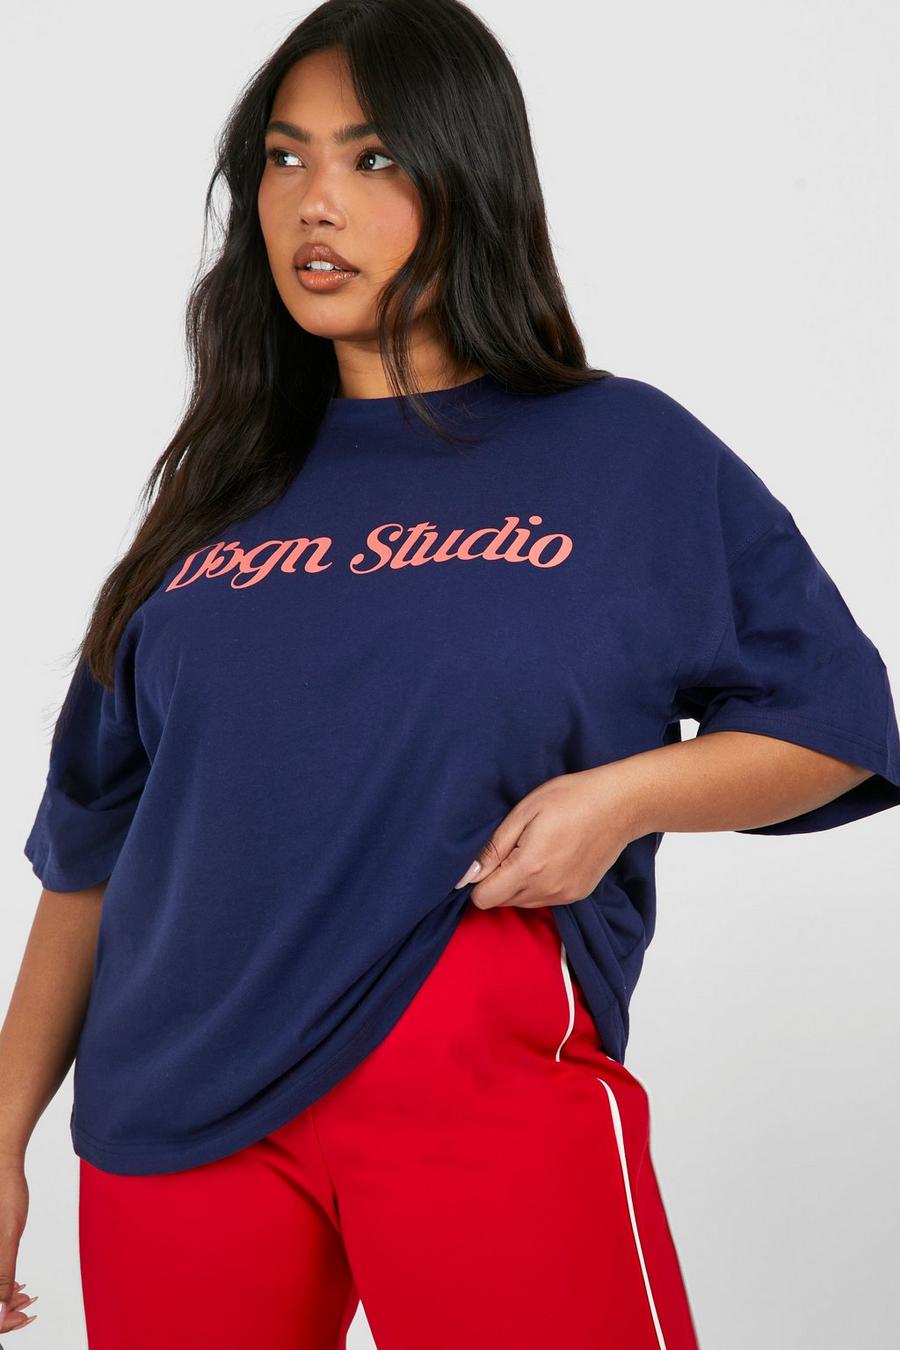 Plus Oversize T-Shirt mit Dsgn Studio Schriftzug, Navy